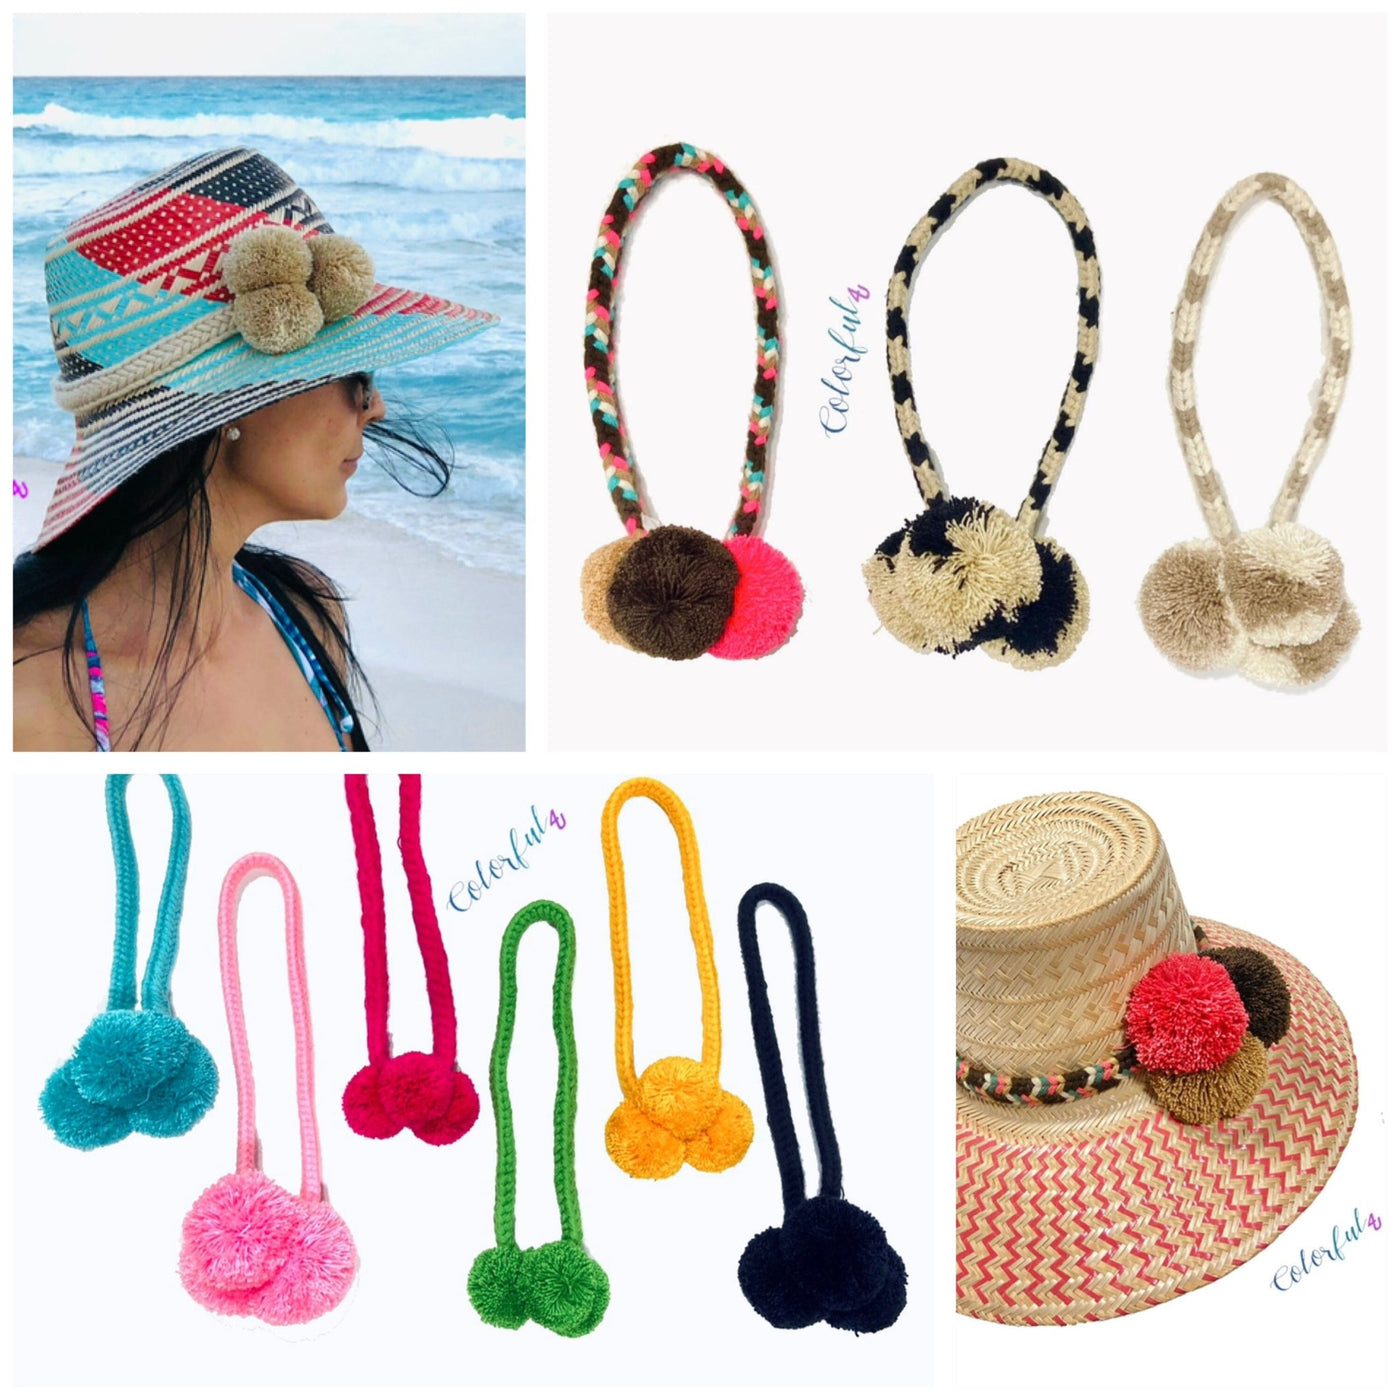 Black Handwoven Hat with Colorful Pompom Band - Colorful 4U - Handmade Iraca Straw Hat - Wayuu Hat